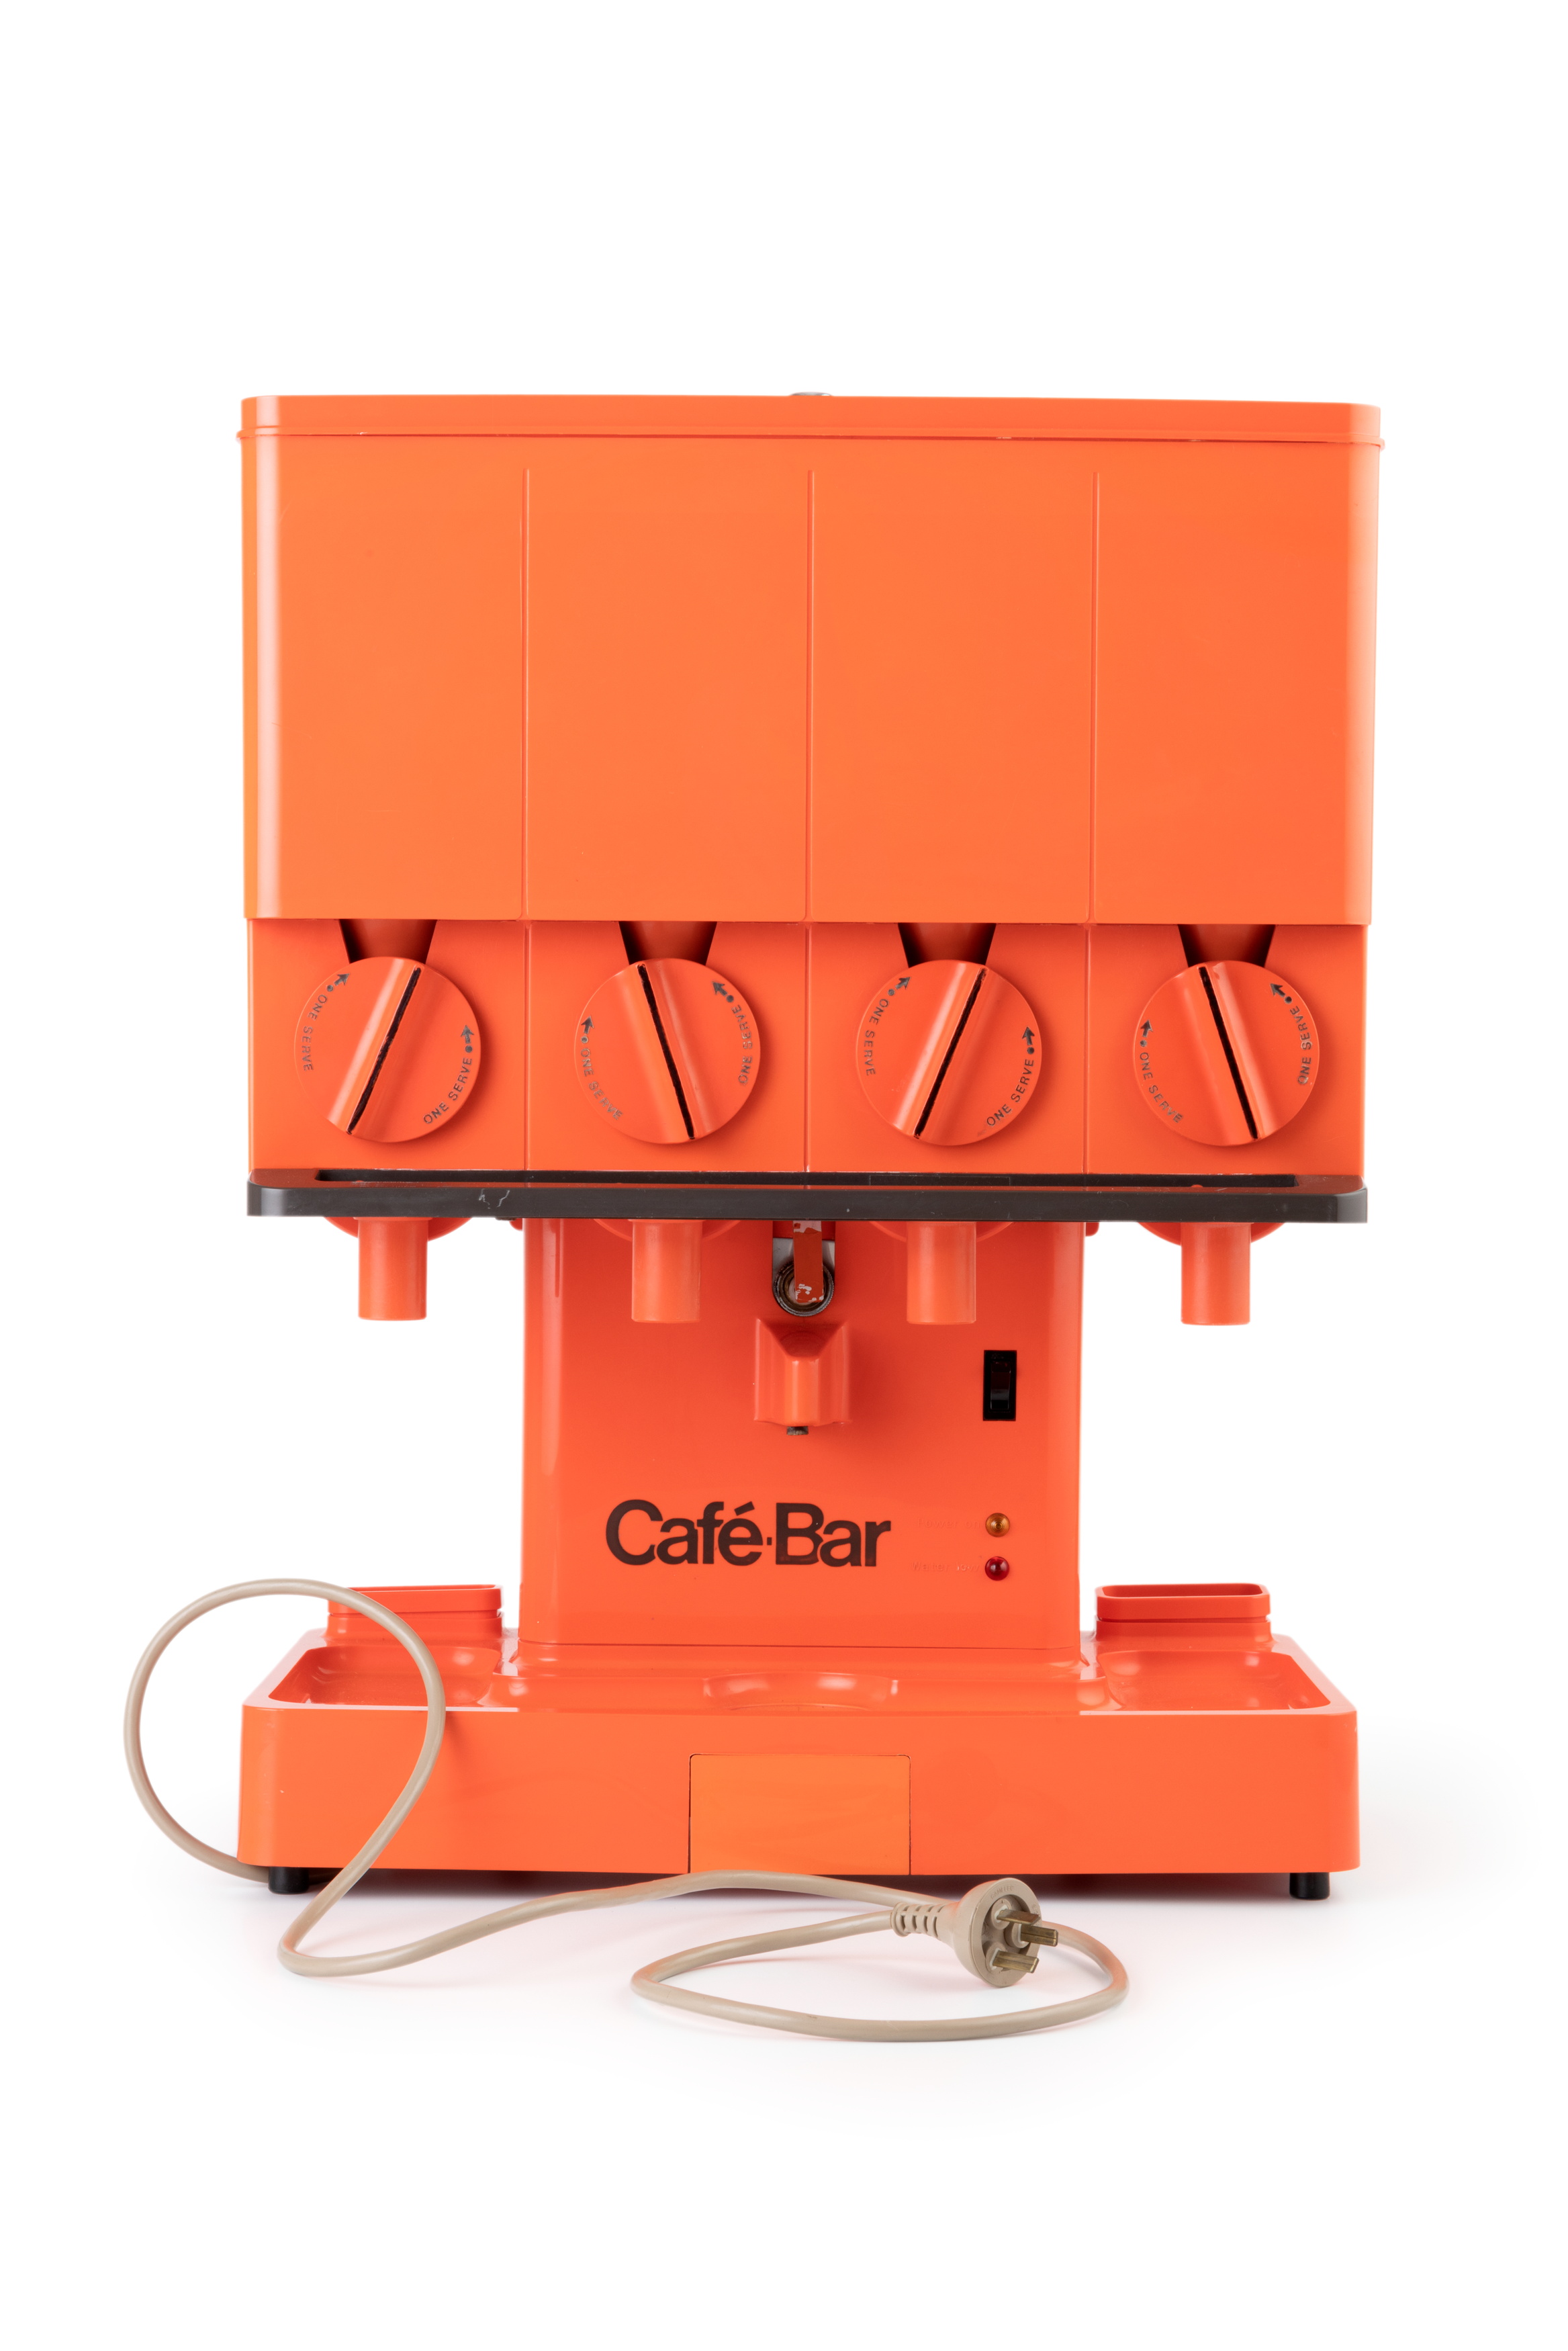 'Cafe Bar Compact' hot drink dispensing machine by Nielsen Design Associates and Cafe Bar International